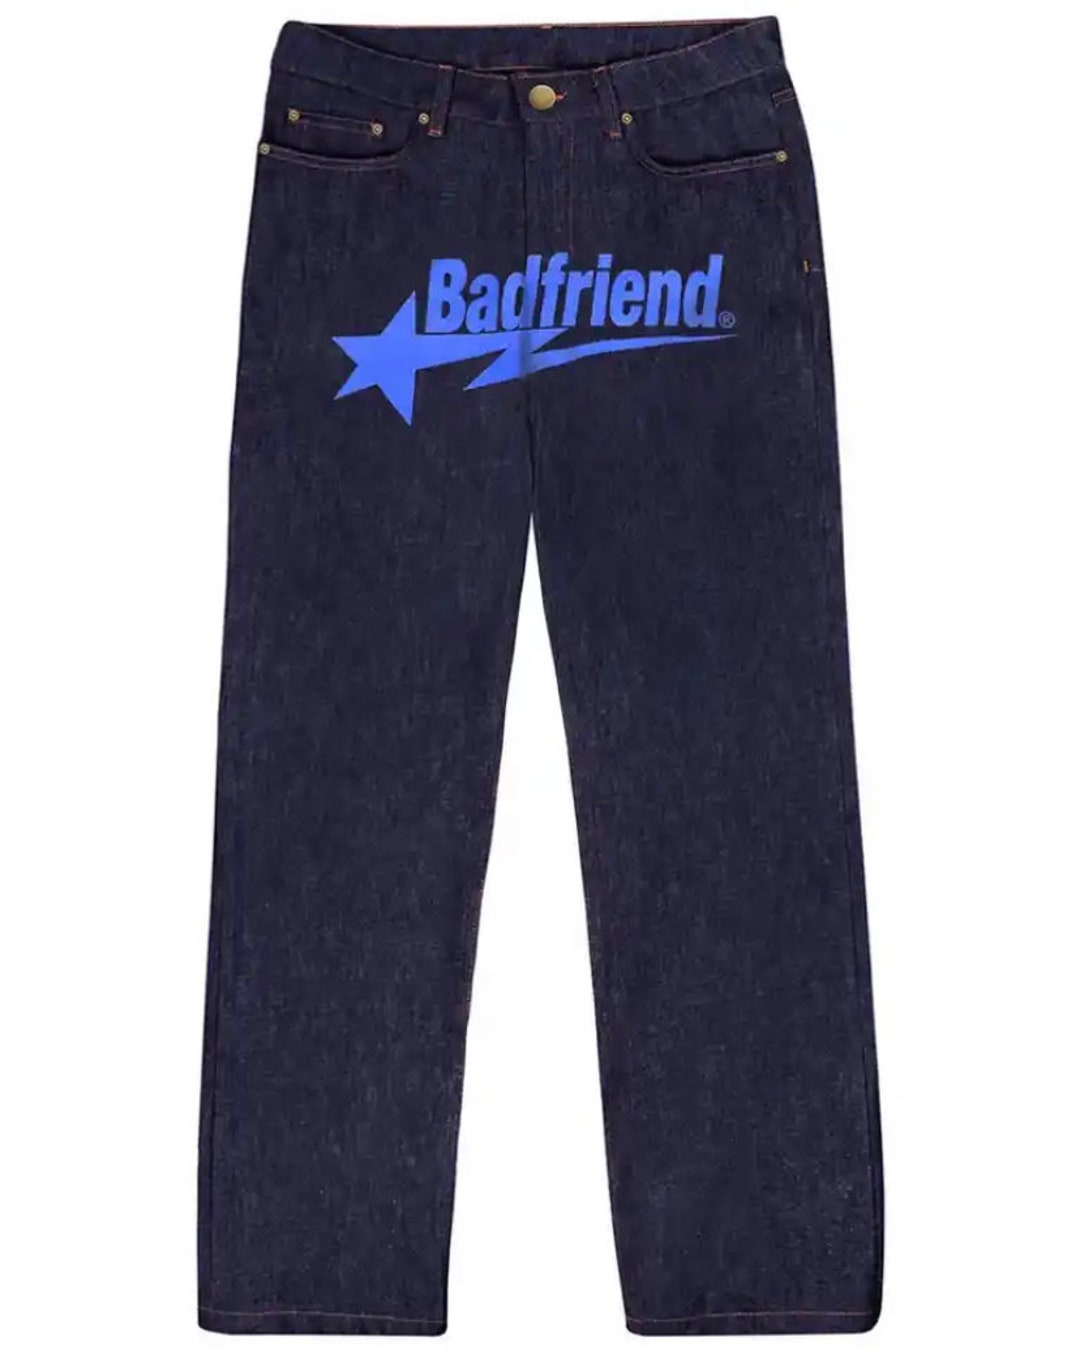 badfriend Jeans - Etsy